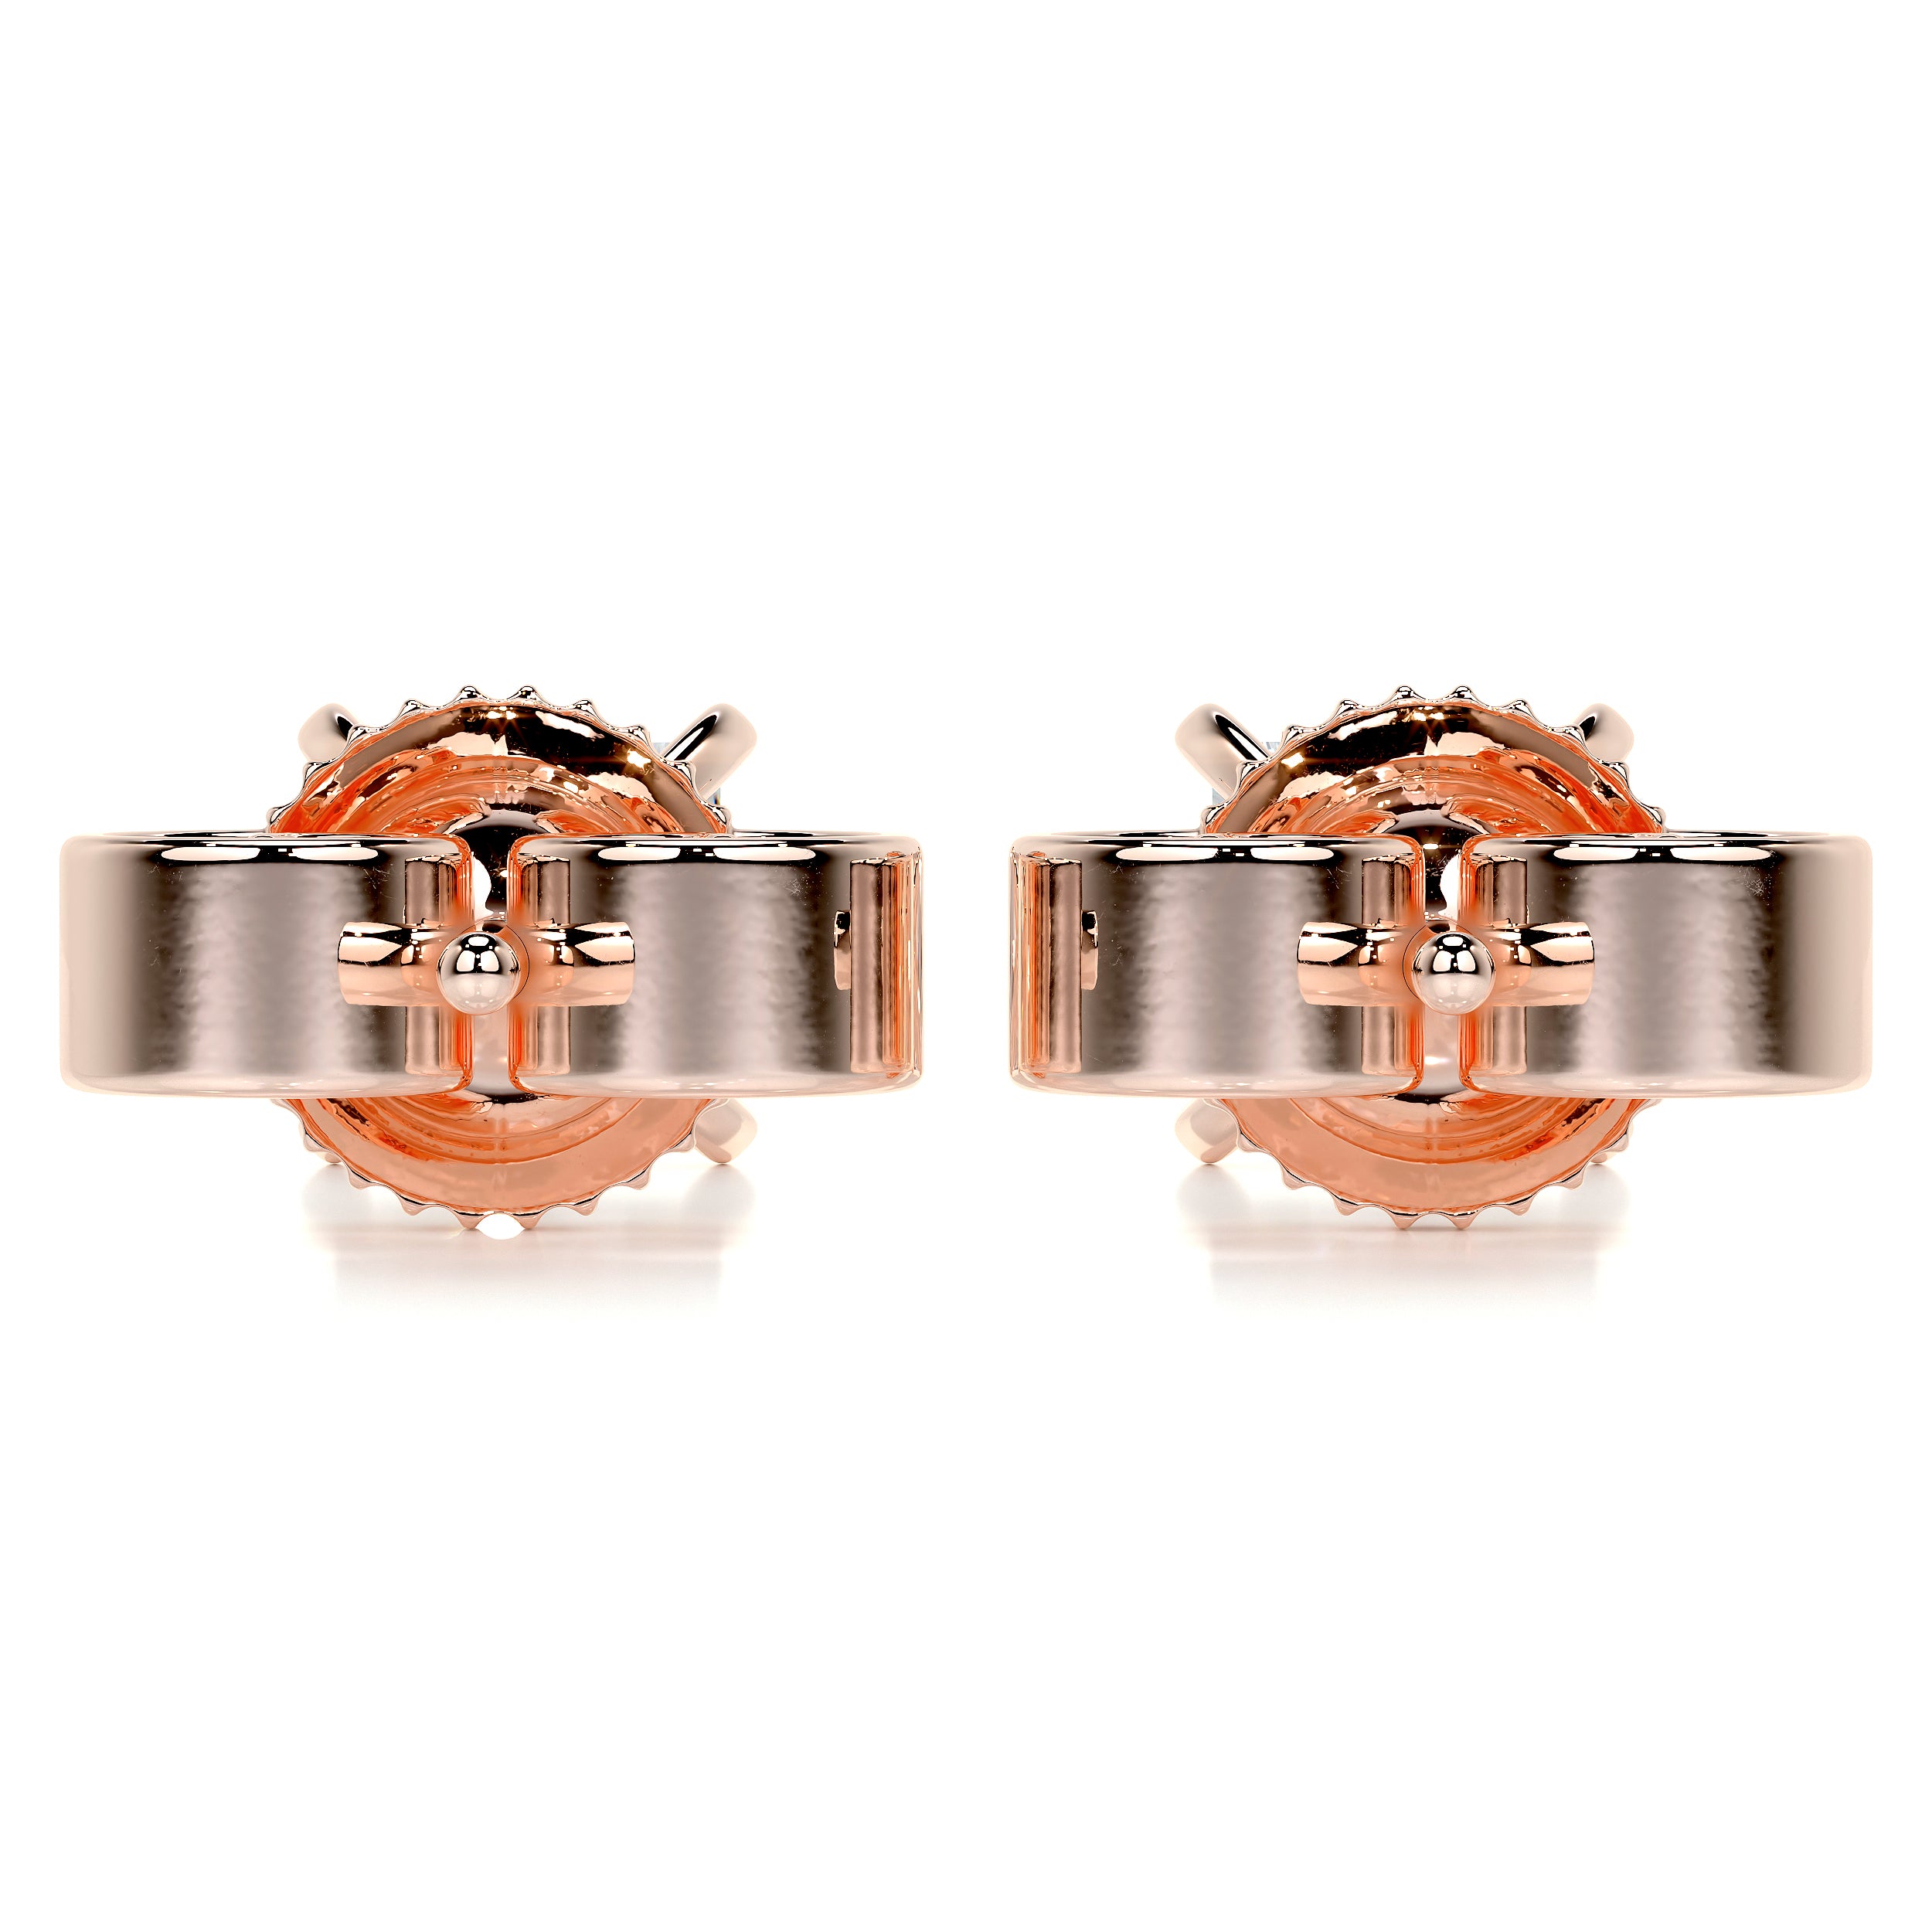 Jamie Diamond Earrings -14K Rose Gold